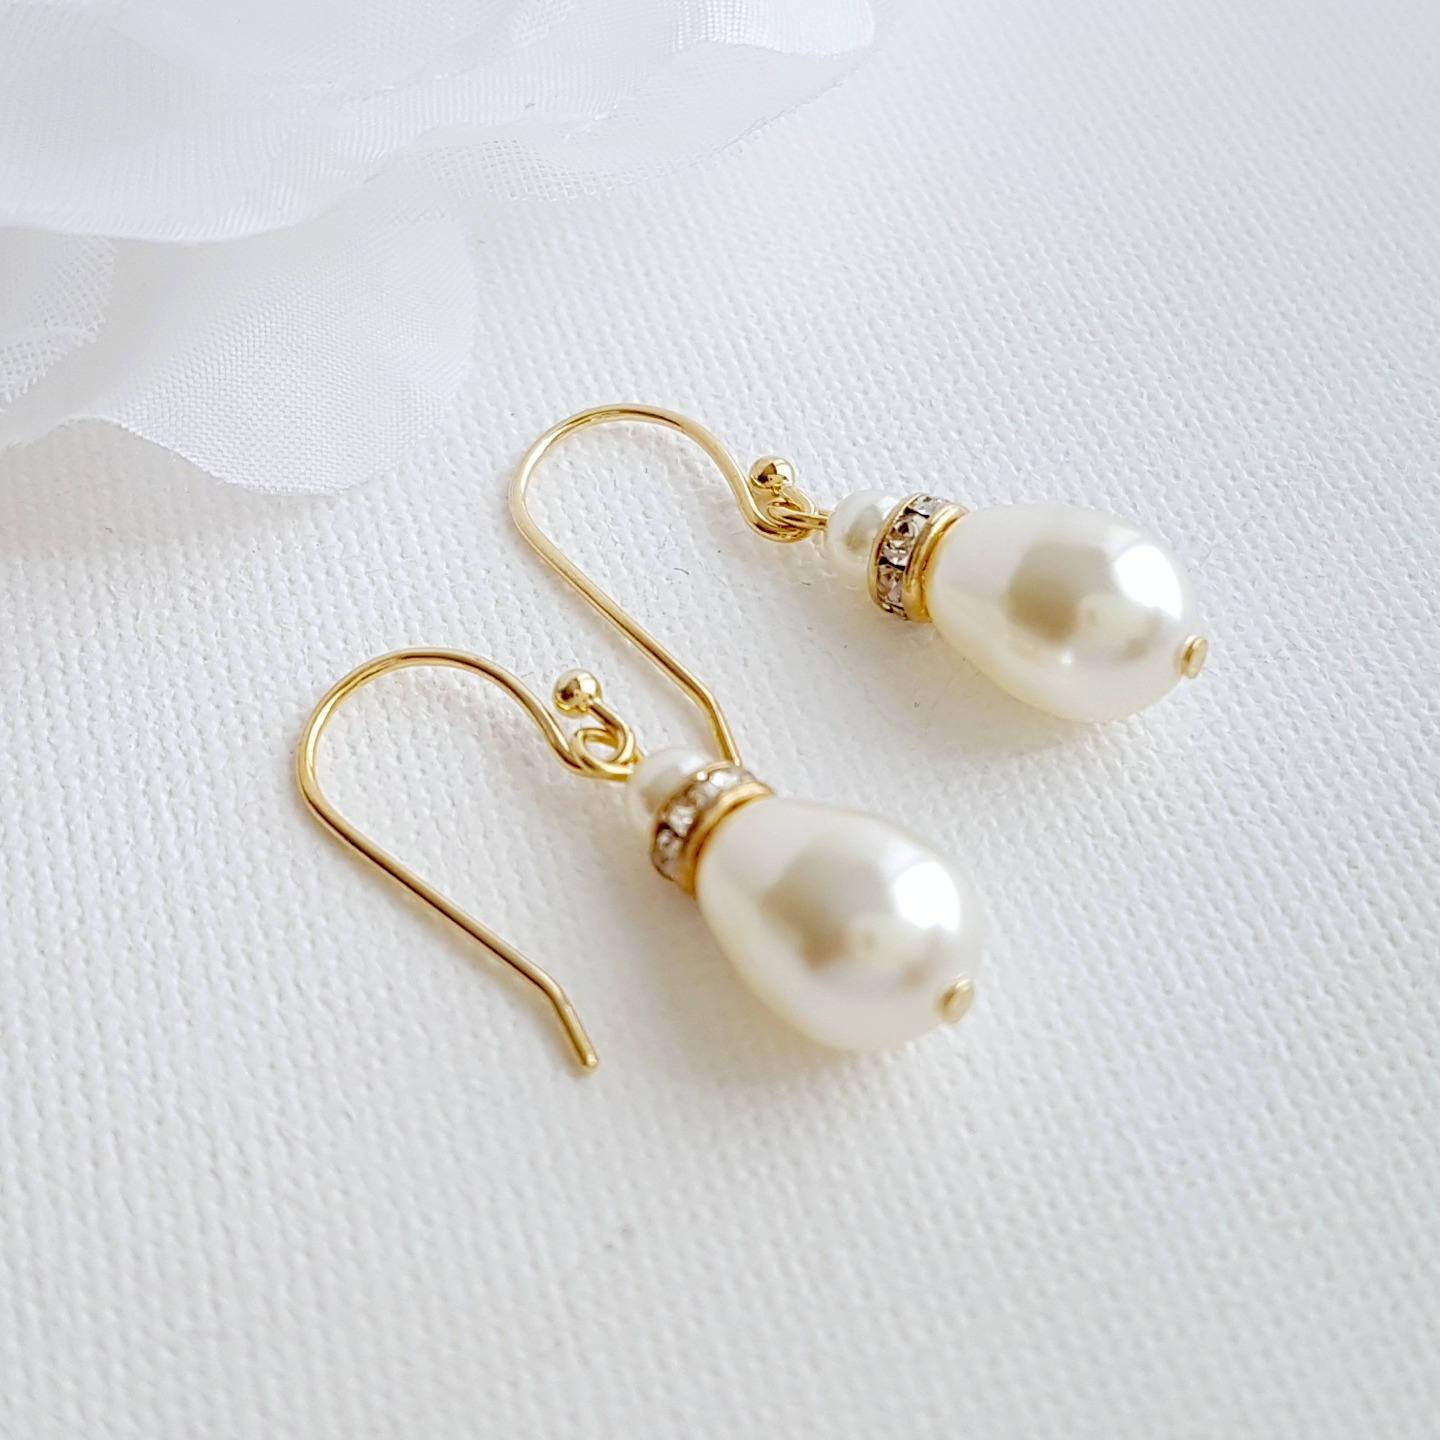 Simple Gold Earrings With Pearl Drops -June - PoetryDesigns